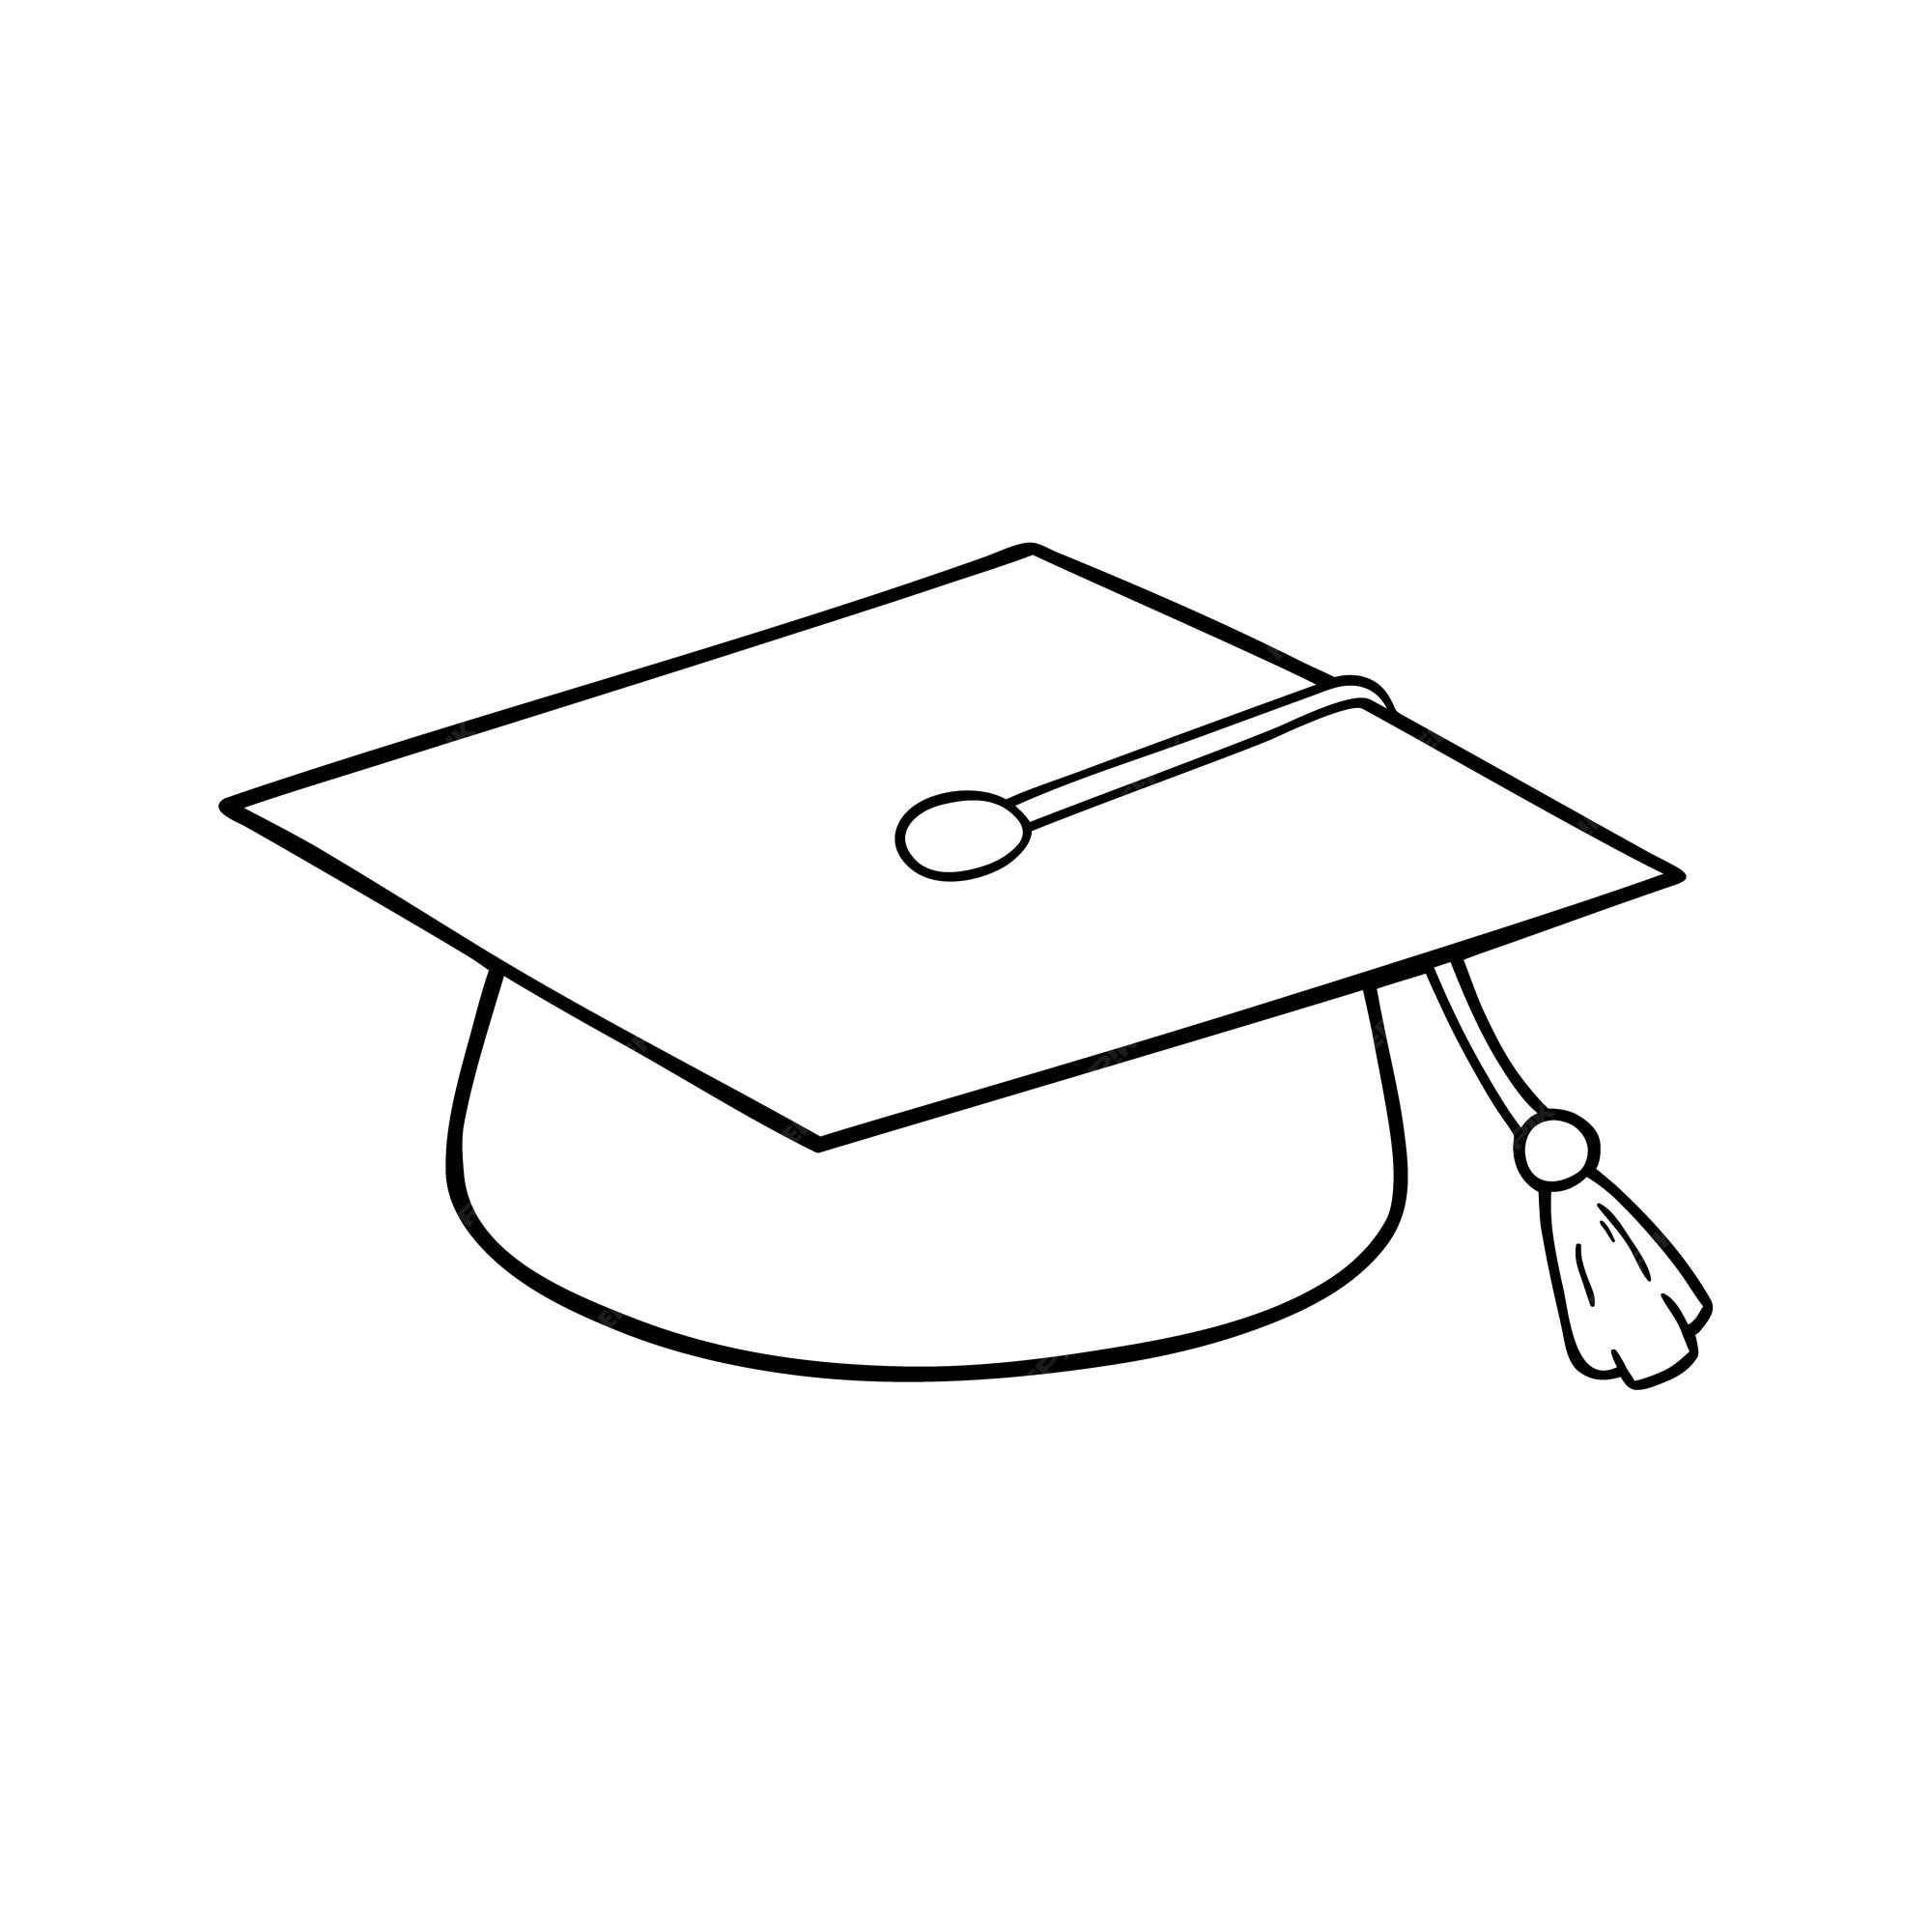 Premium vector kids coloring page with outline doodle graduation hat